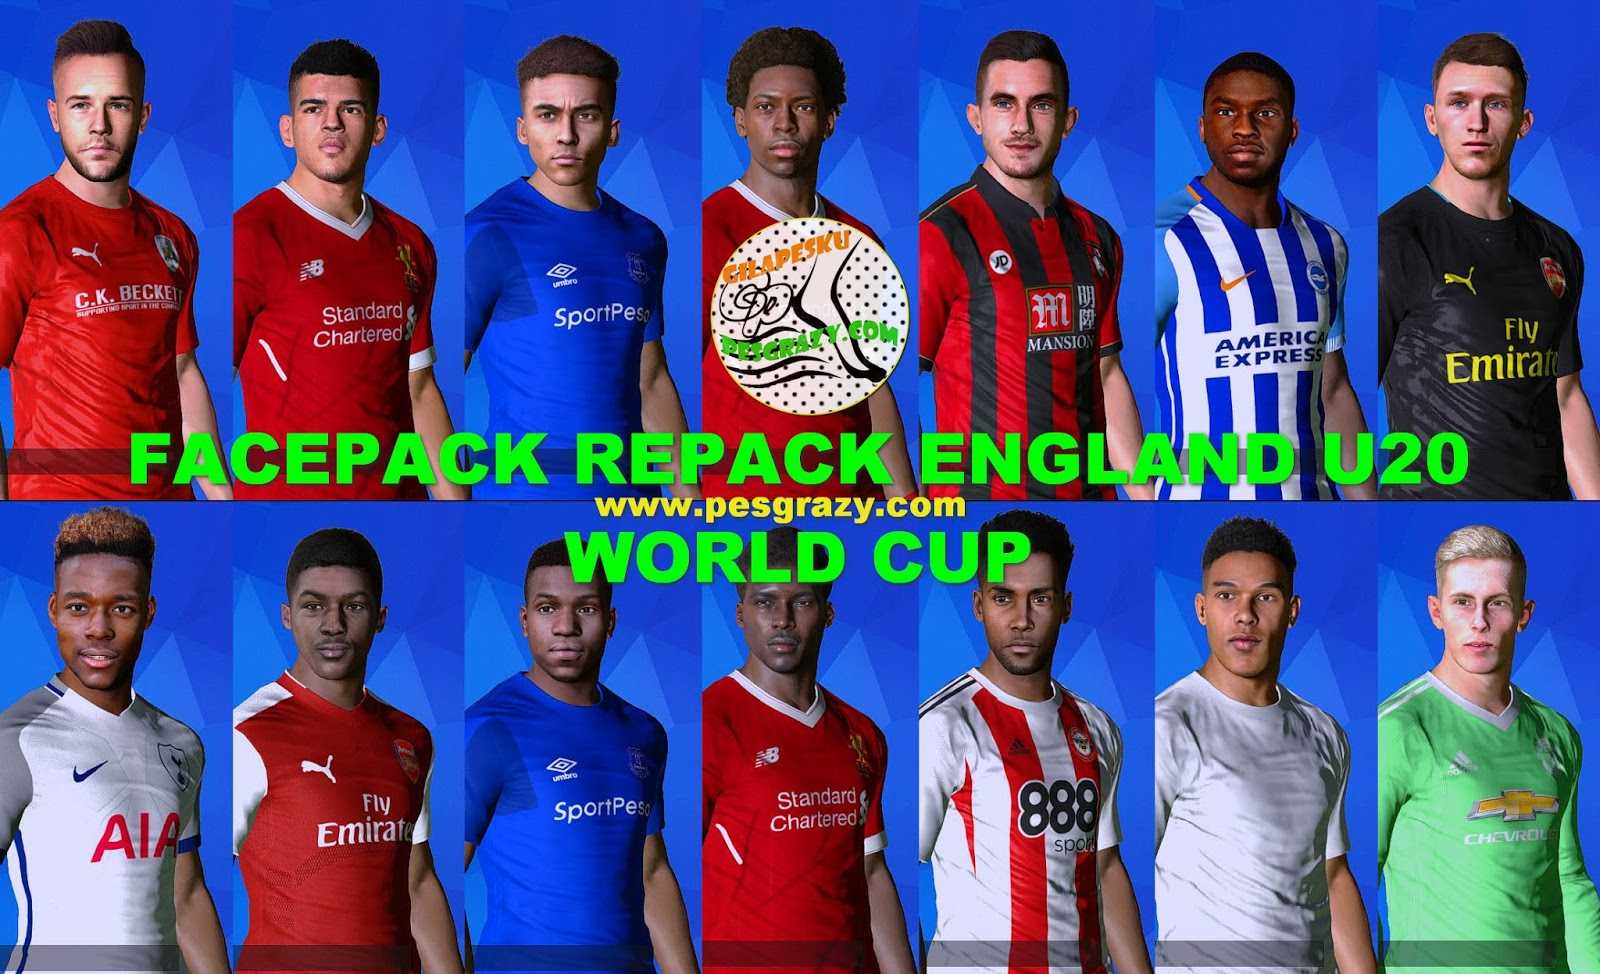 ultigamerz: PES 2017 FACEPACK REPACK ENGLAND U20 WORLD CUP